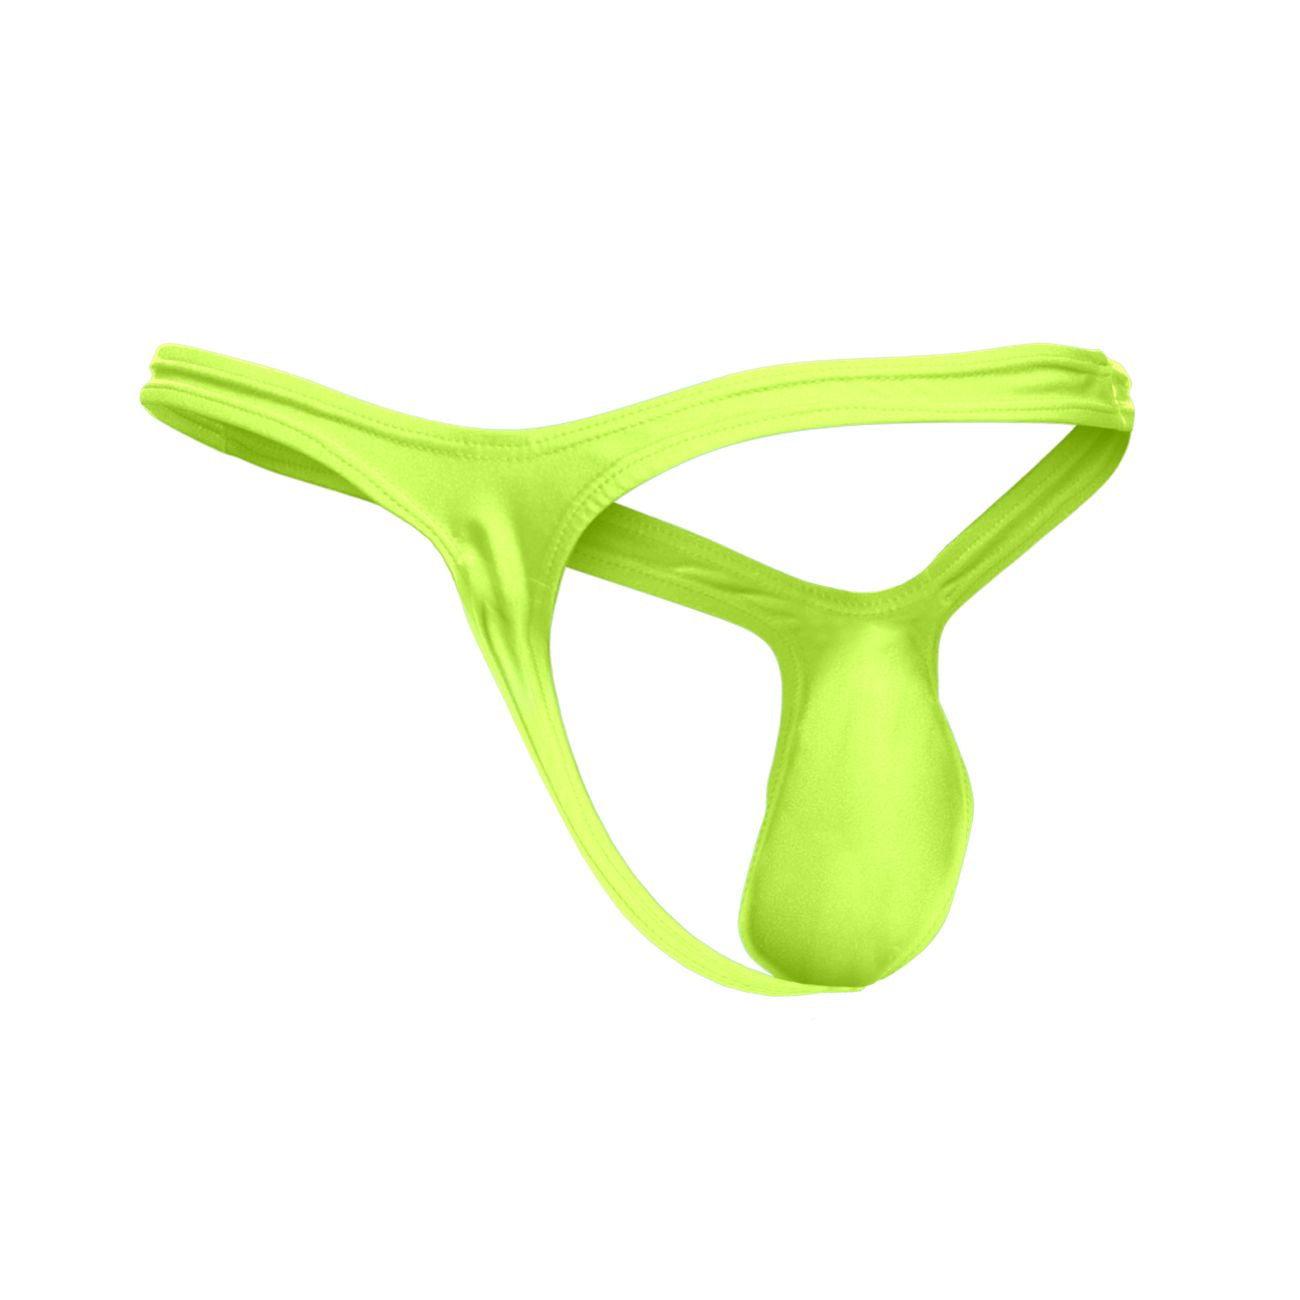 JUSTIN+SIMON XSJBU02 Bulge Thongs Neon Green Plus Sizes